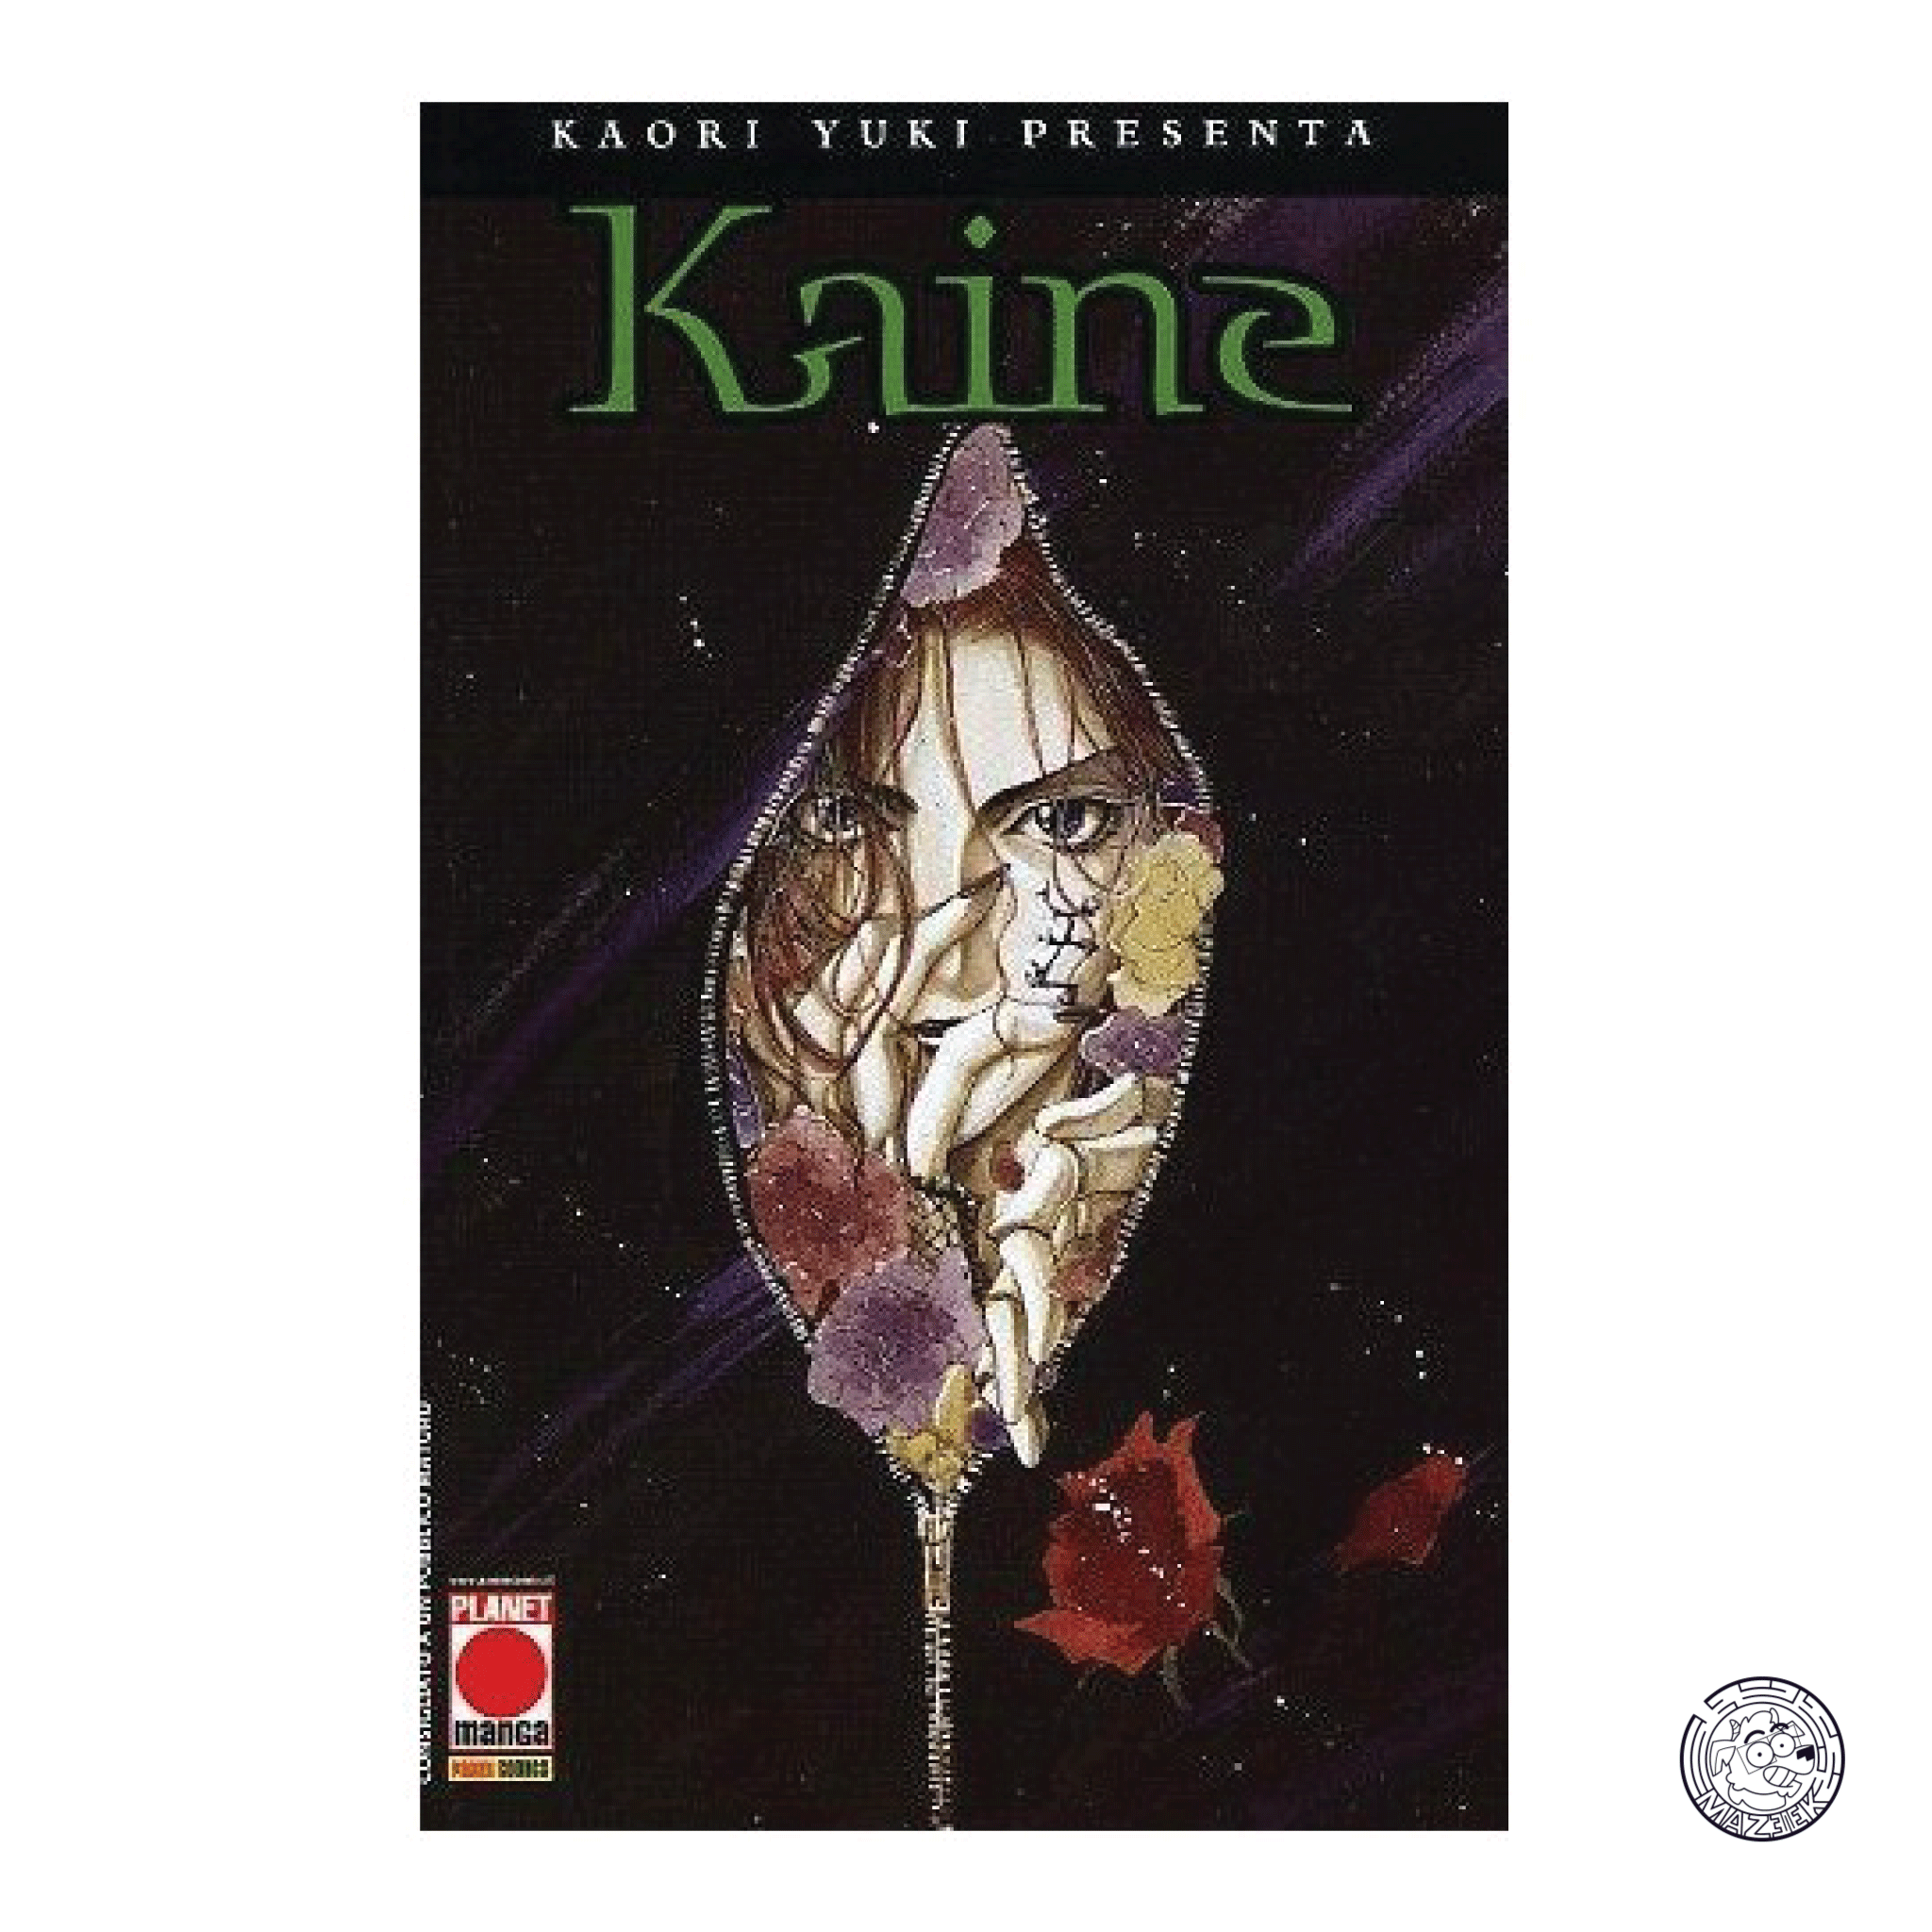 Kaori Yuki Presents: Kaine